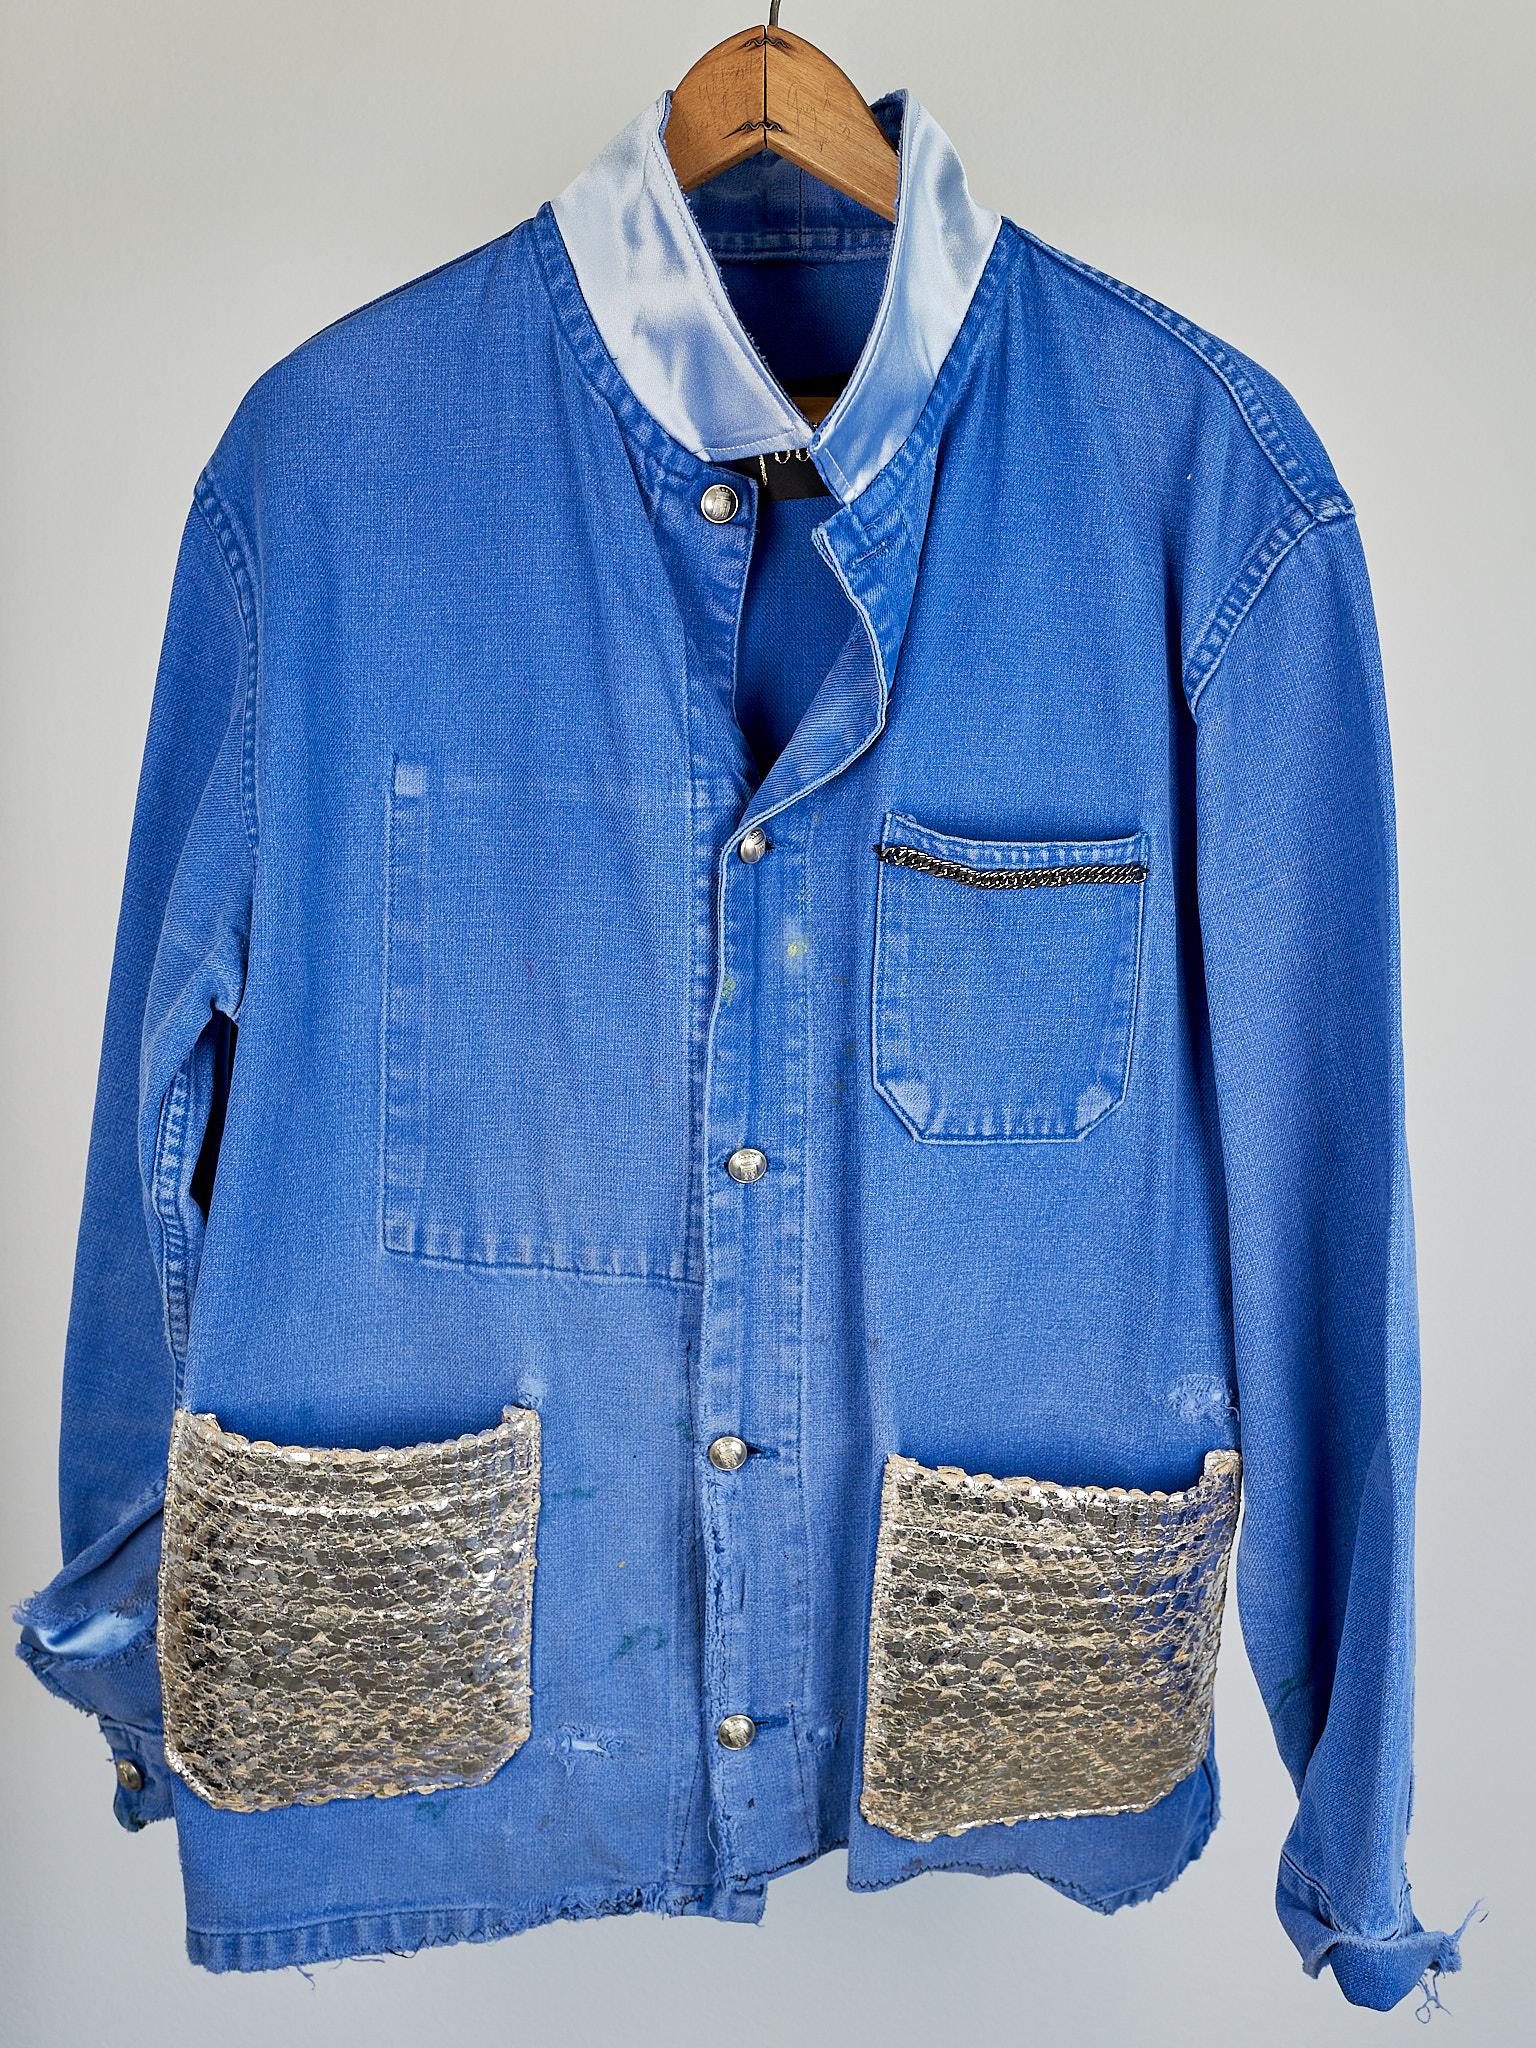 Collectible Vintage Blue Cobalt Distressed Jacket  French Work Wear Silver Tweed 3